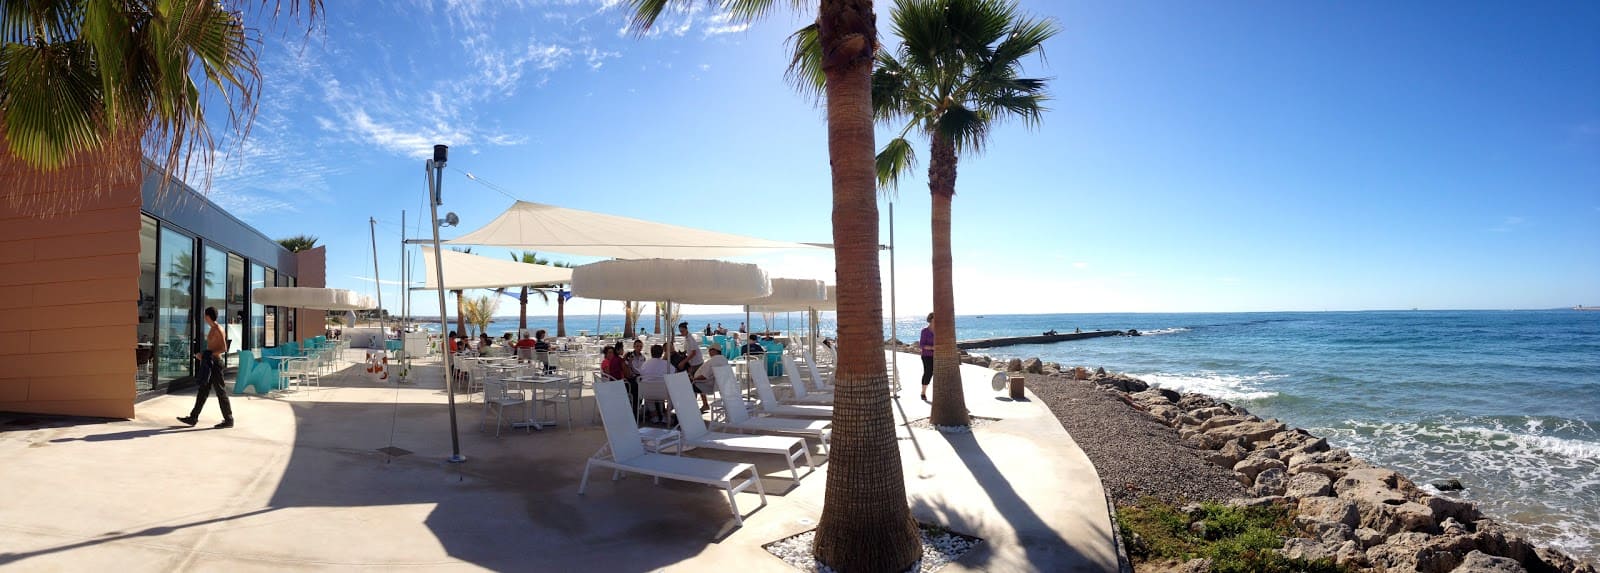 Anima Beach Club restaurante para bodas y eventos en la bahía de palma de mallorca